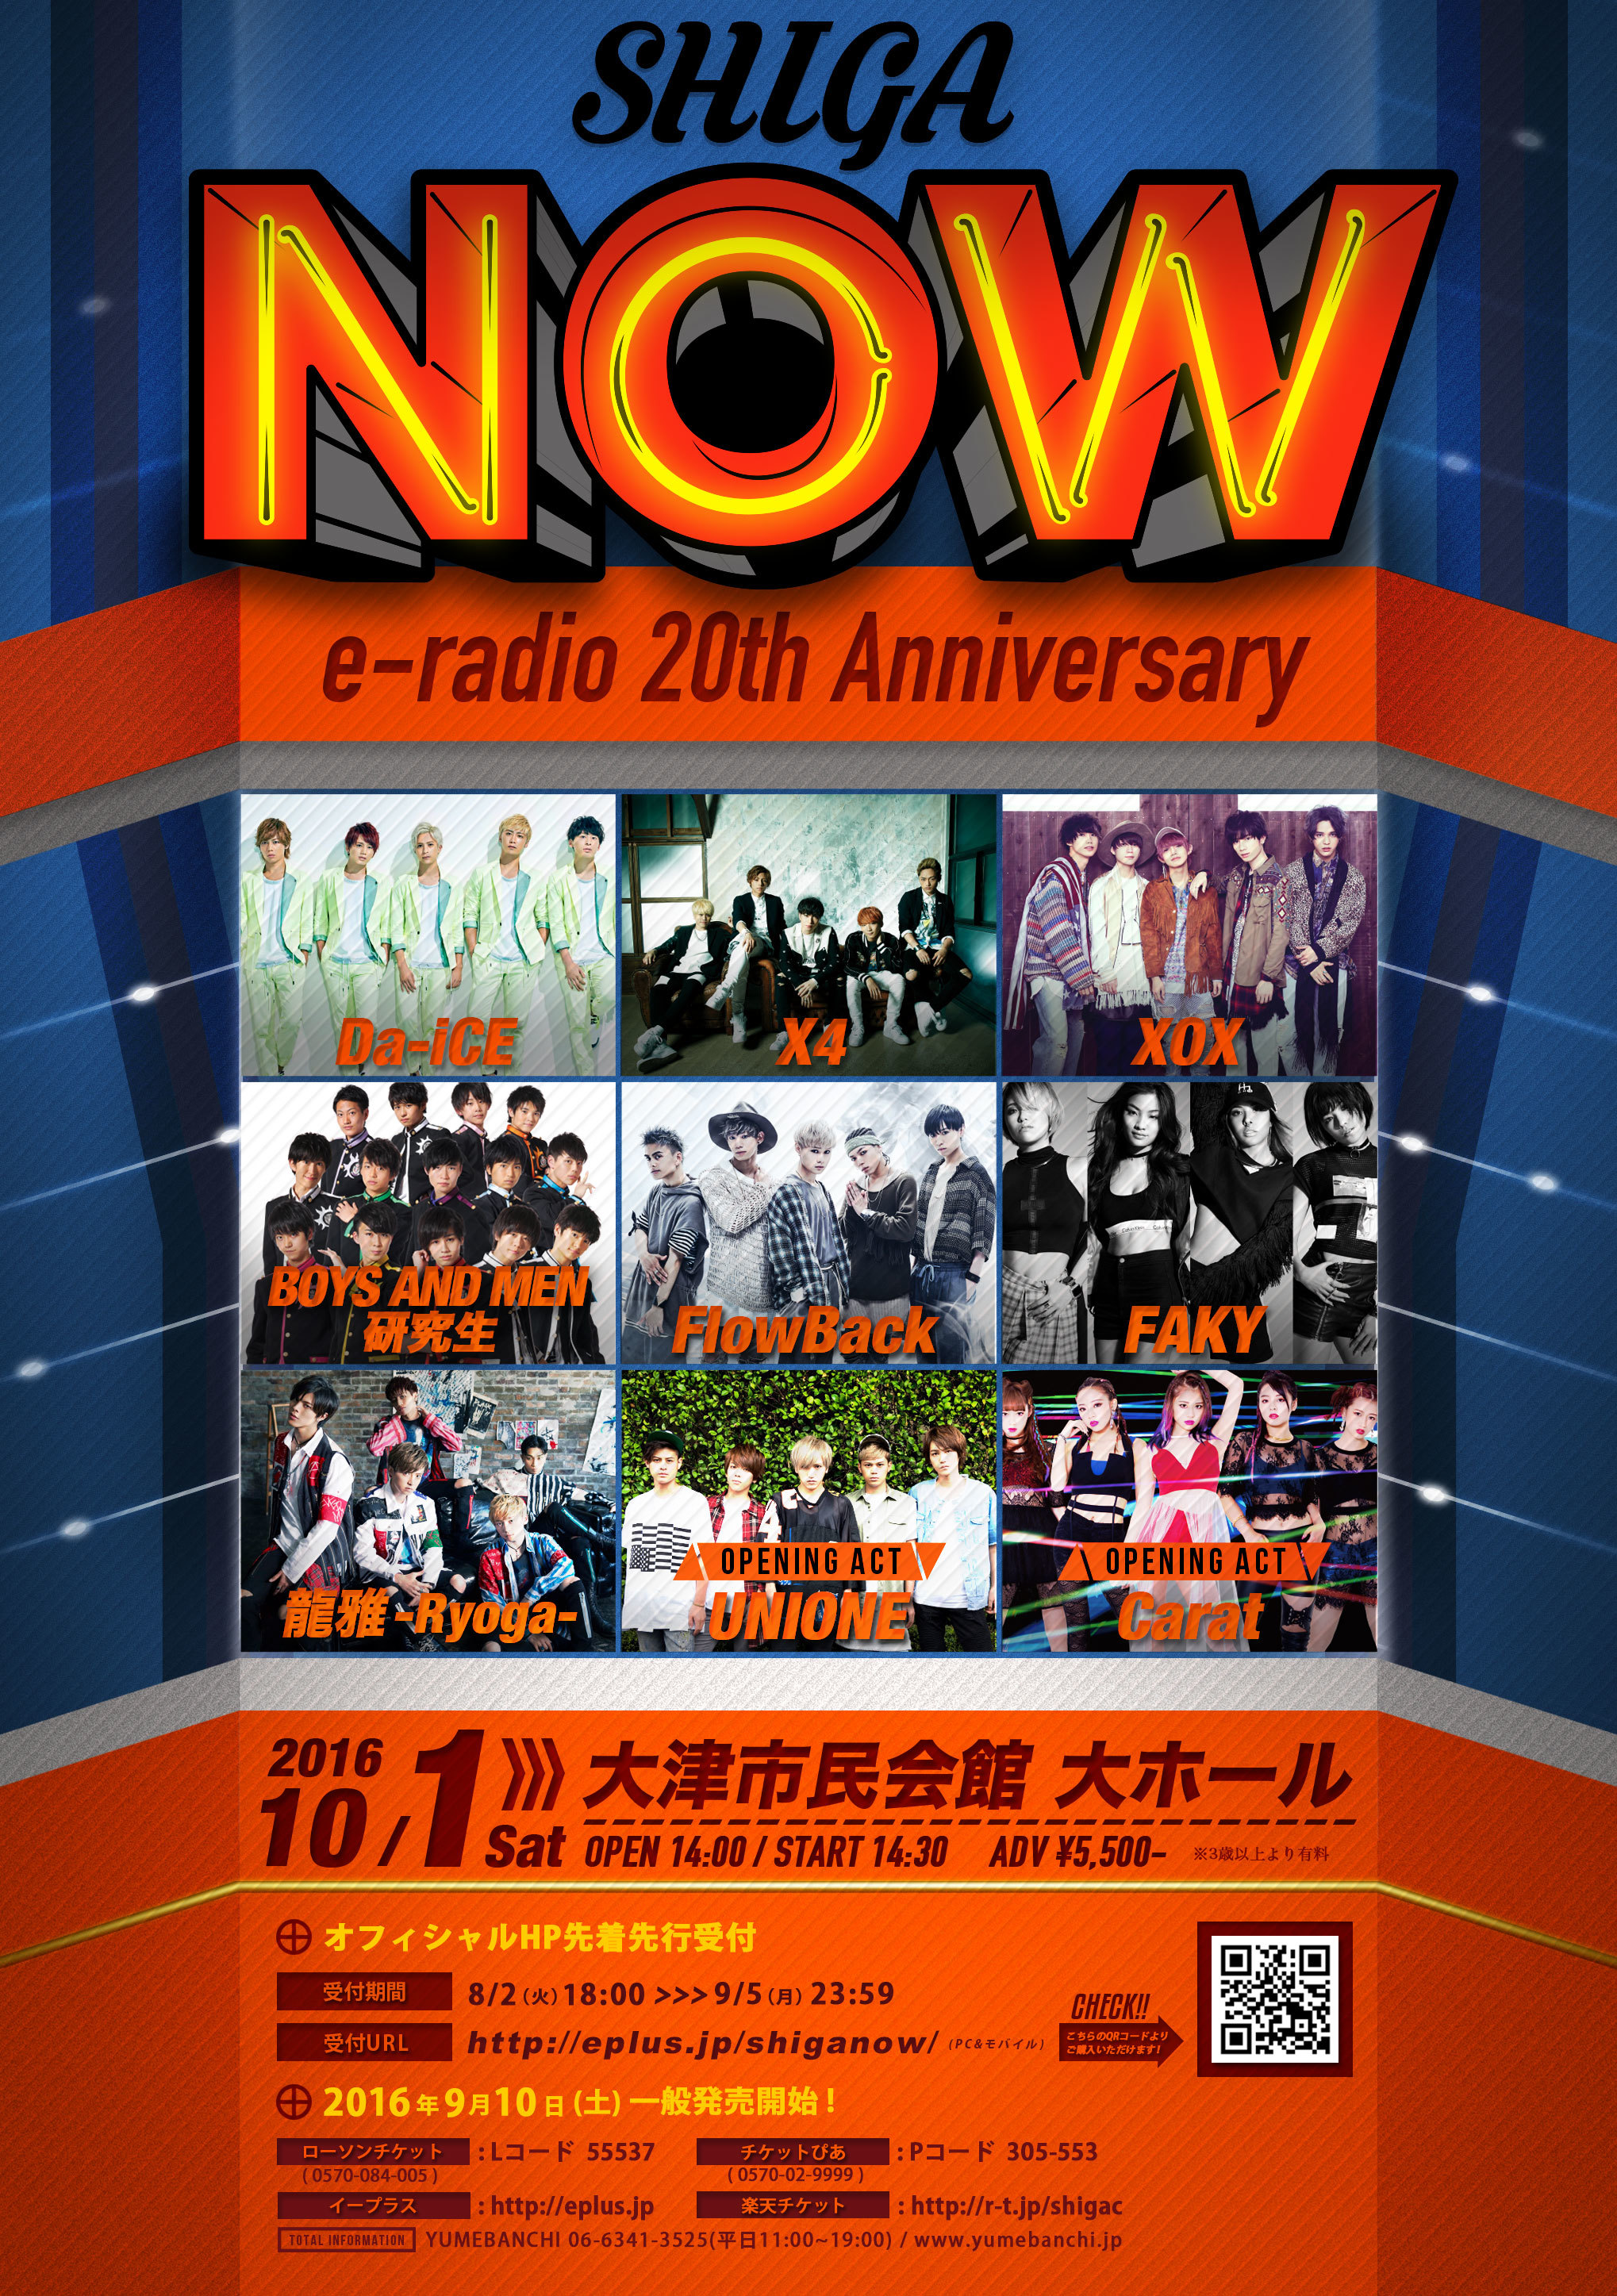 『e-radio 20th Anniversary SHIGA NOW』